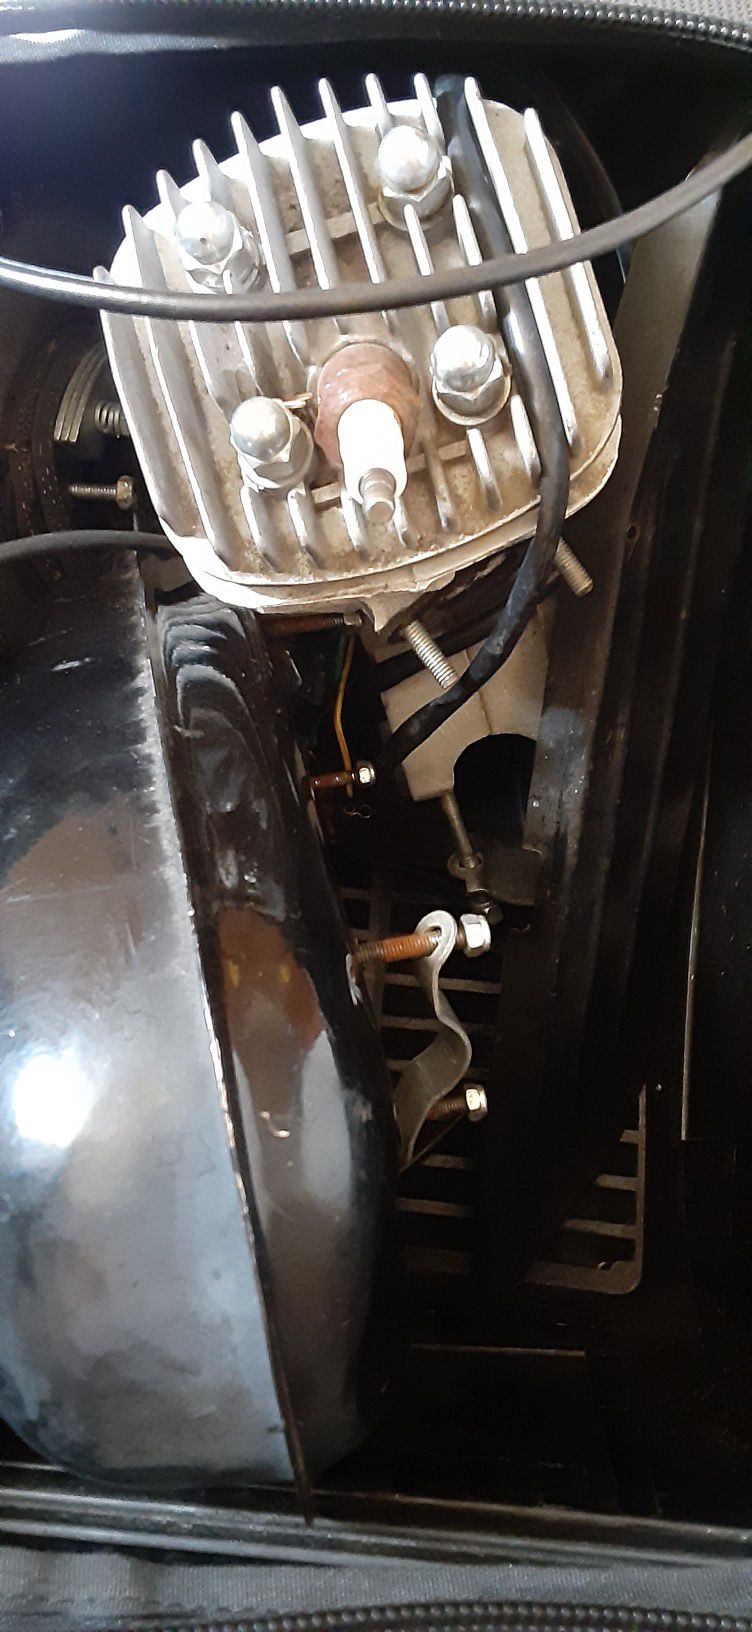 49cc motor and mounting kit